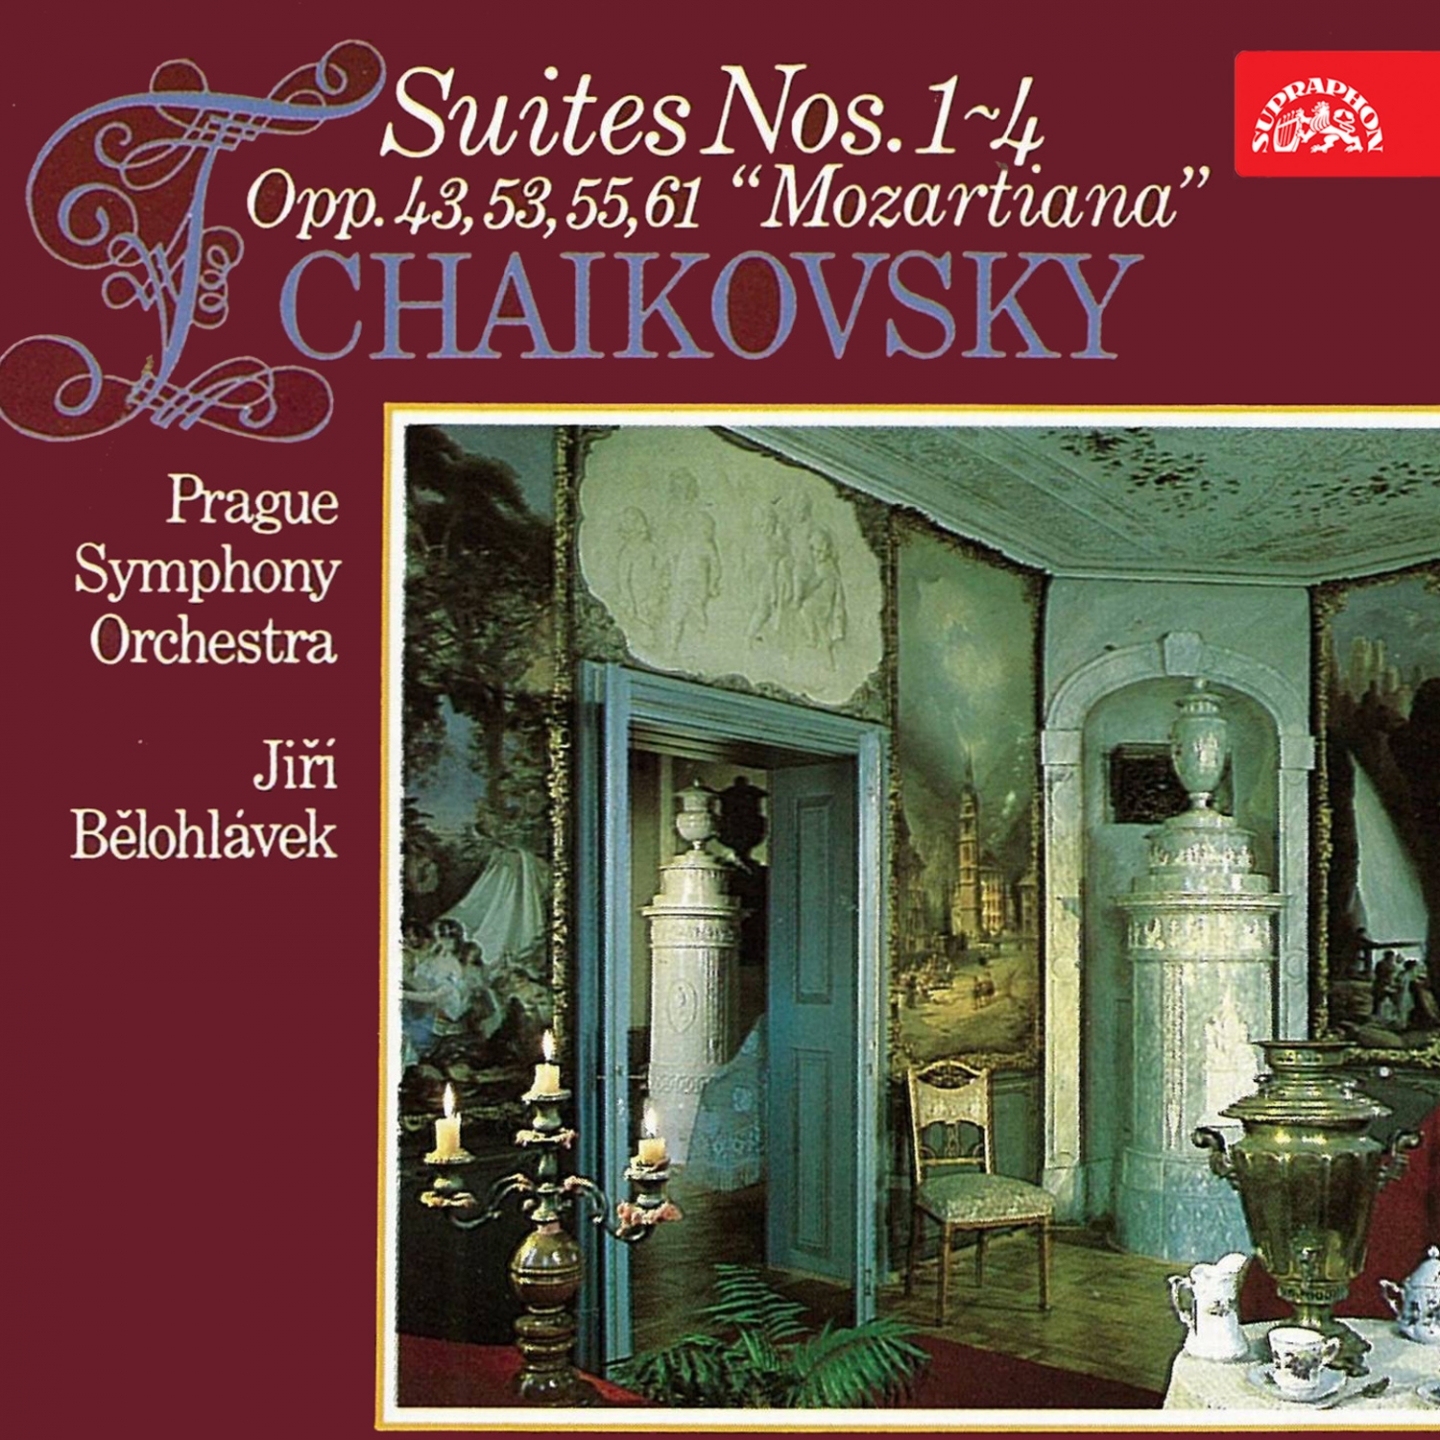 Suite No. 2 in C Major, Op. 53 " Caracte ristique": V. Danse baroque. Vivacissimo